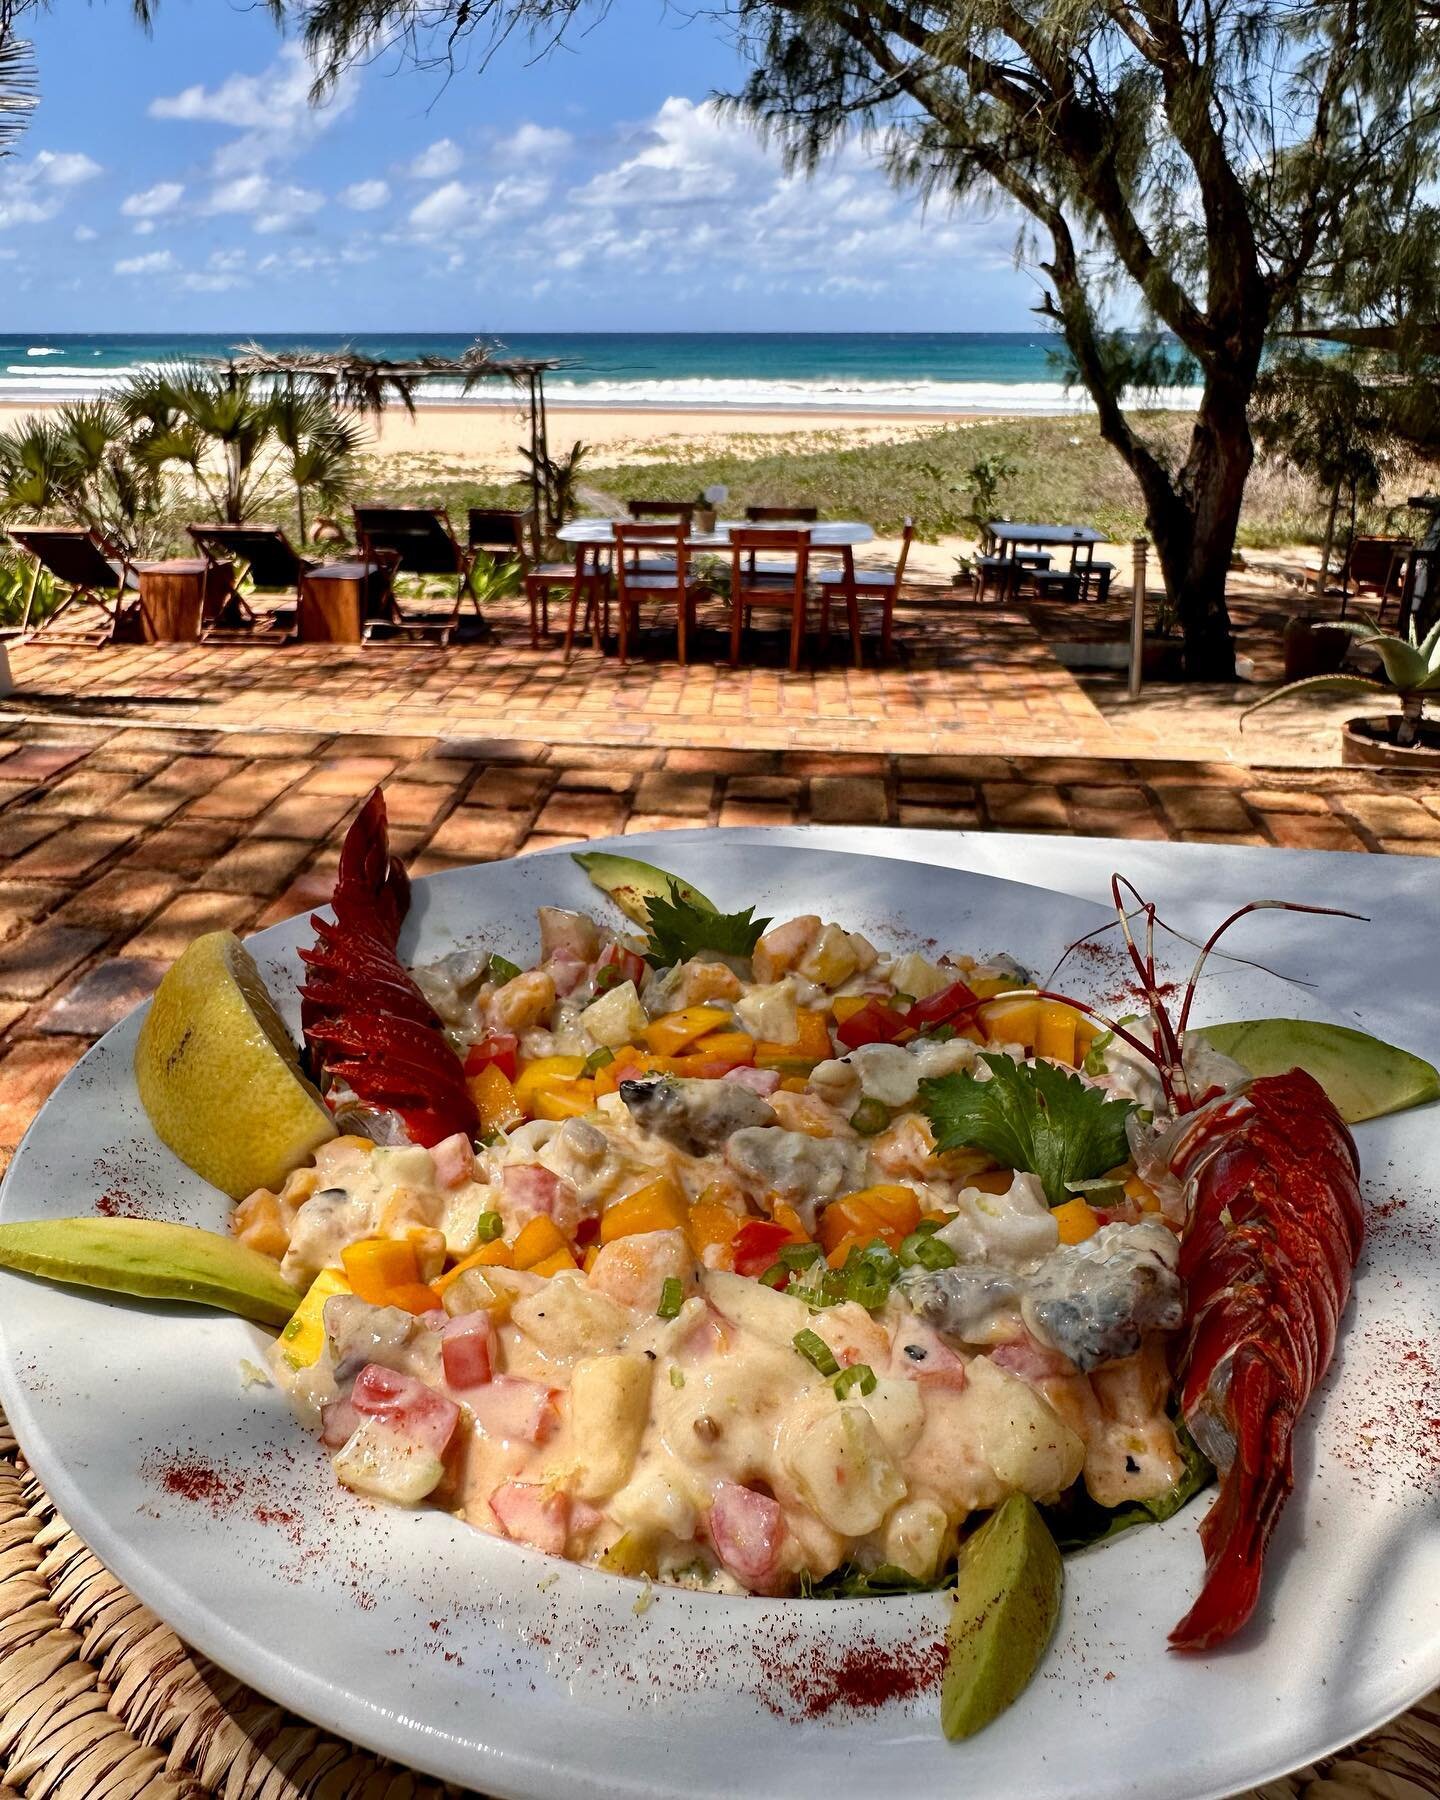 We have created new salads for you to enjoy 🥗🦀! 

Come and taste🤤

- our original Happi salad 
- crab salad 
- lobster salad
- calamari salad 
- falafel salad
.
.
.
.
.

#beachresort #beachrestaurant #beachholiday #beachlife🌊 #dreamdestination #d